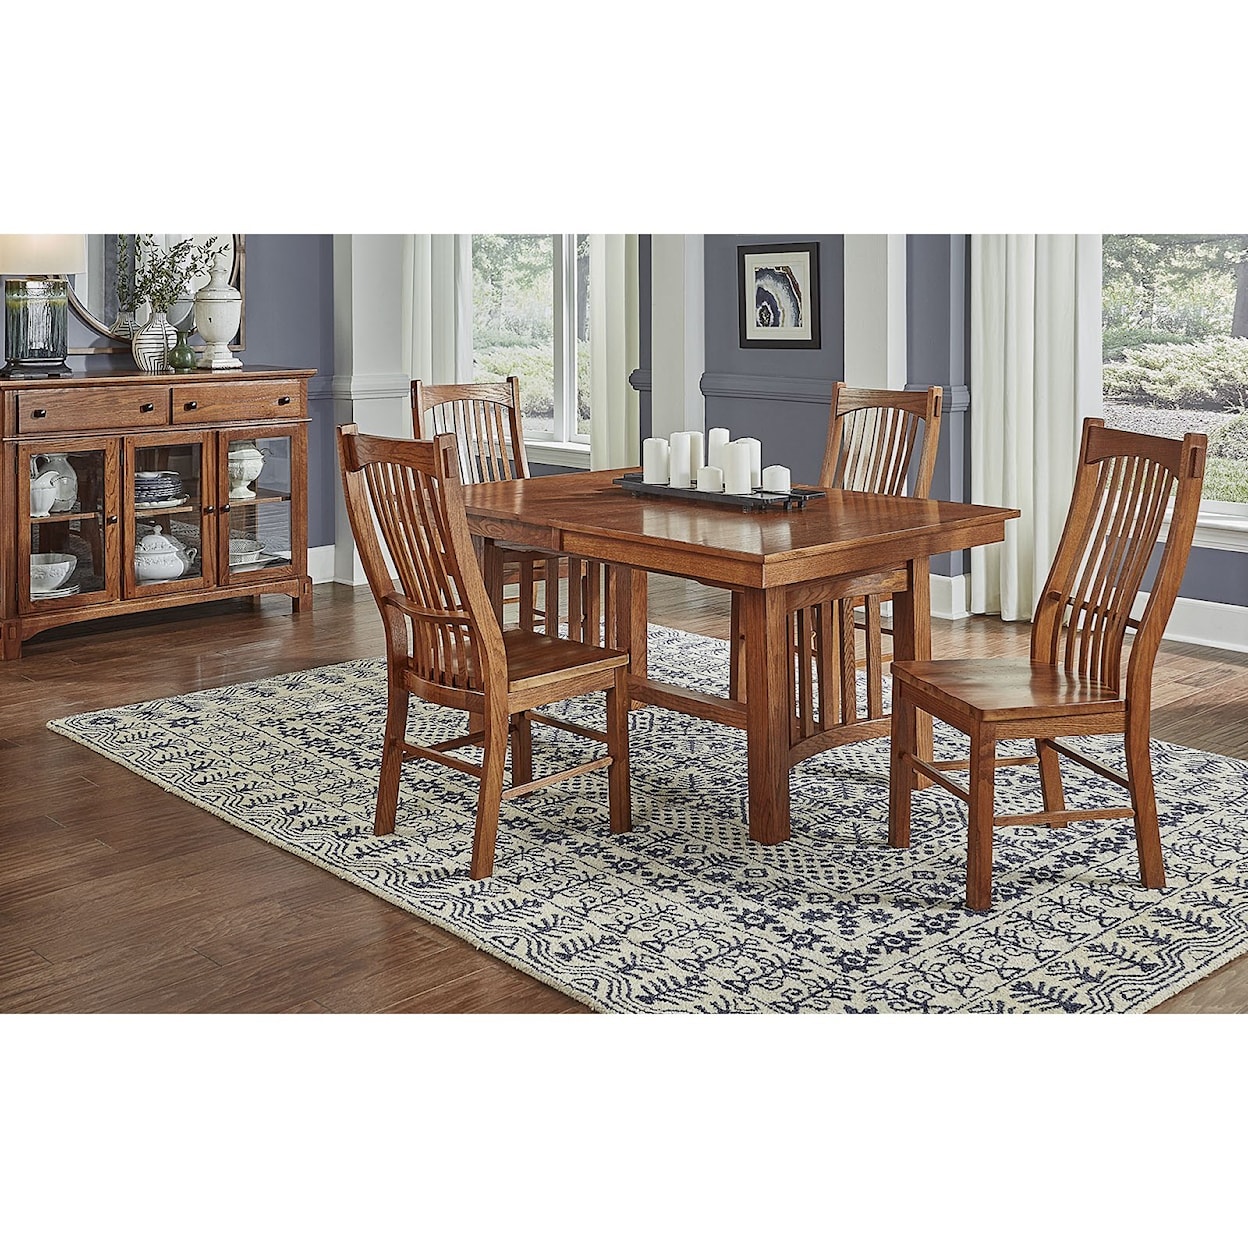 AAmerica Laurelhurst 5-Piece Dining Table & Chair Set